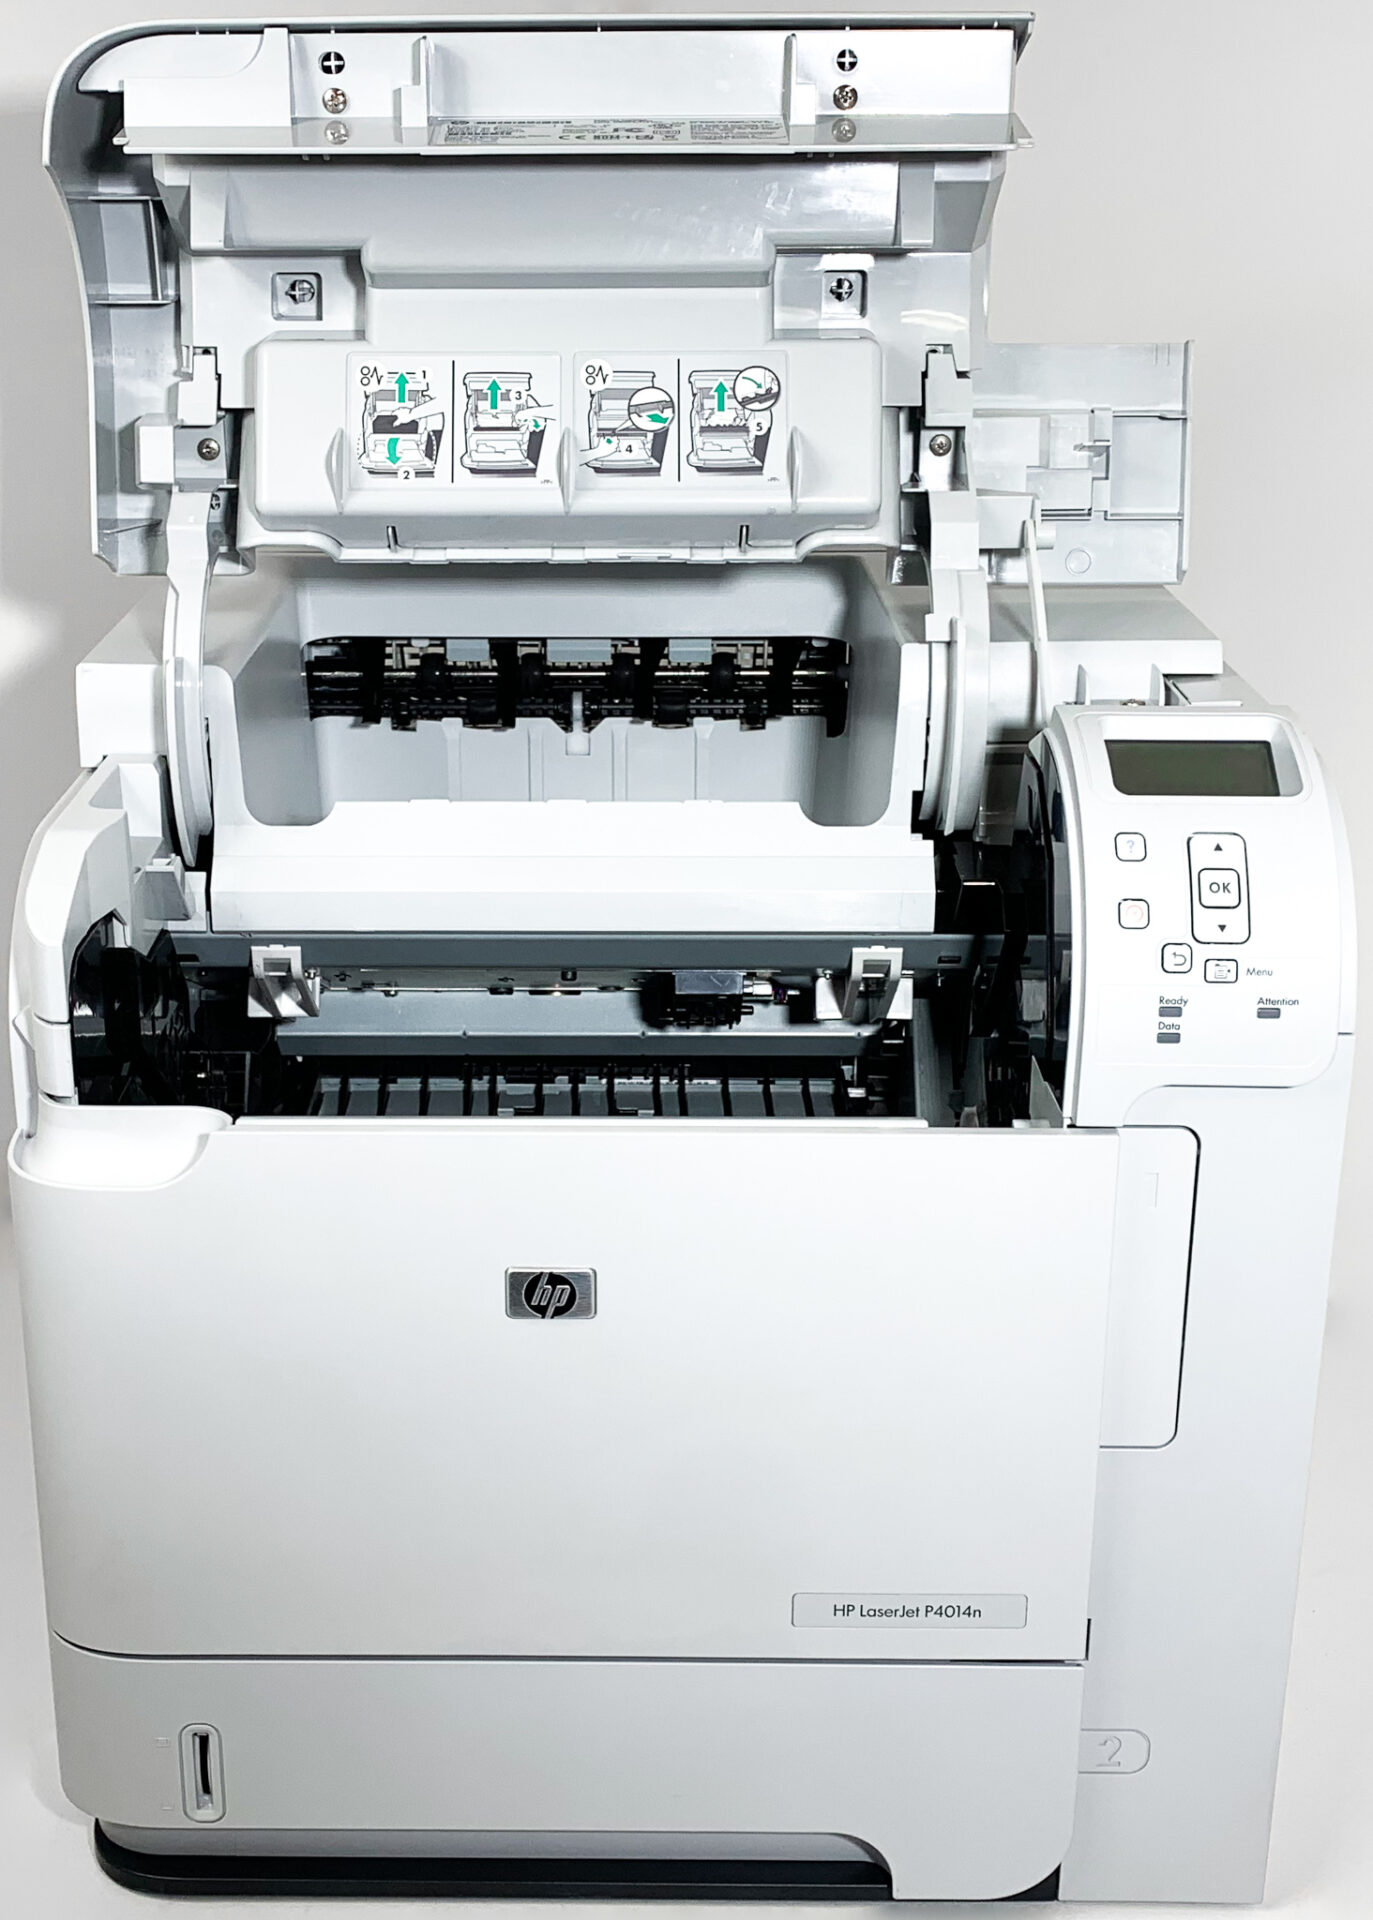 HP LaserJet P4014n Laser Network Printer CB507A - White Spider Electronics